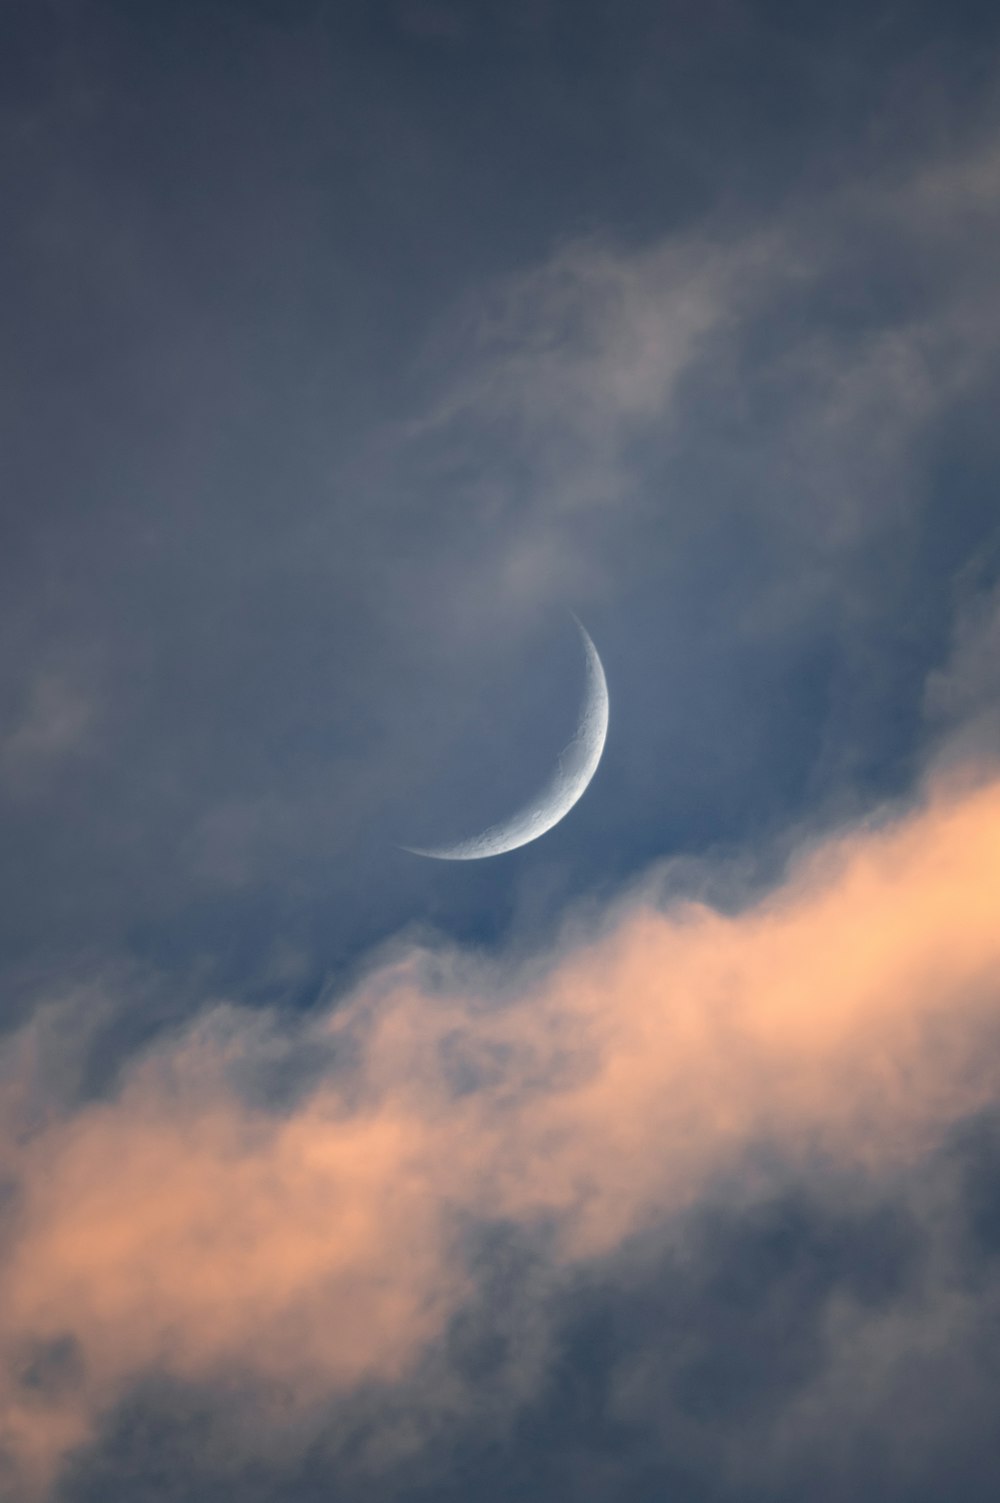 a crescent moon is seen through a cloudy sky